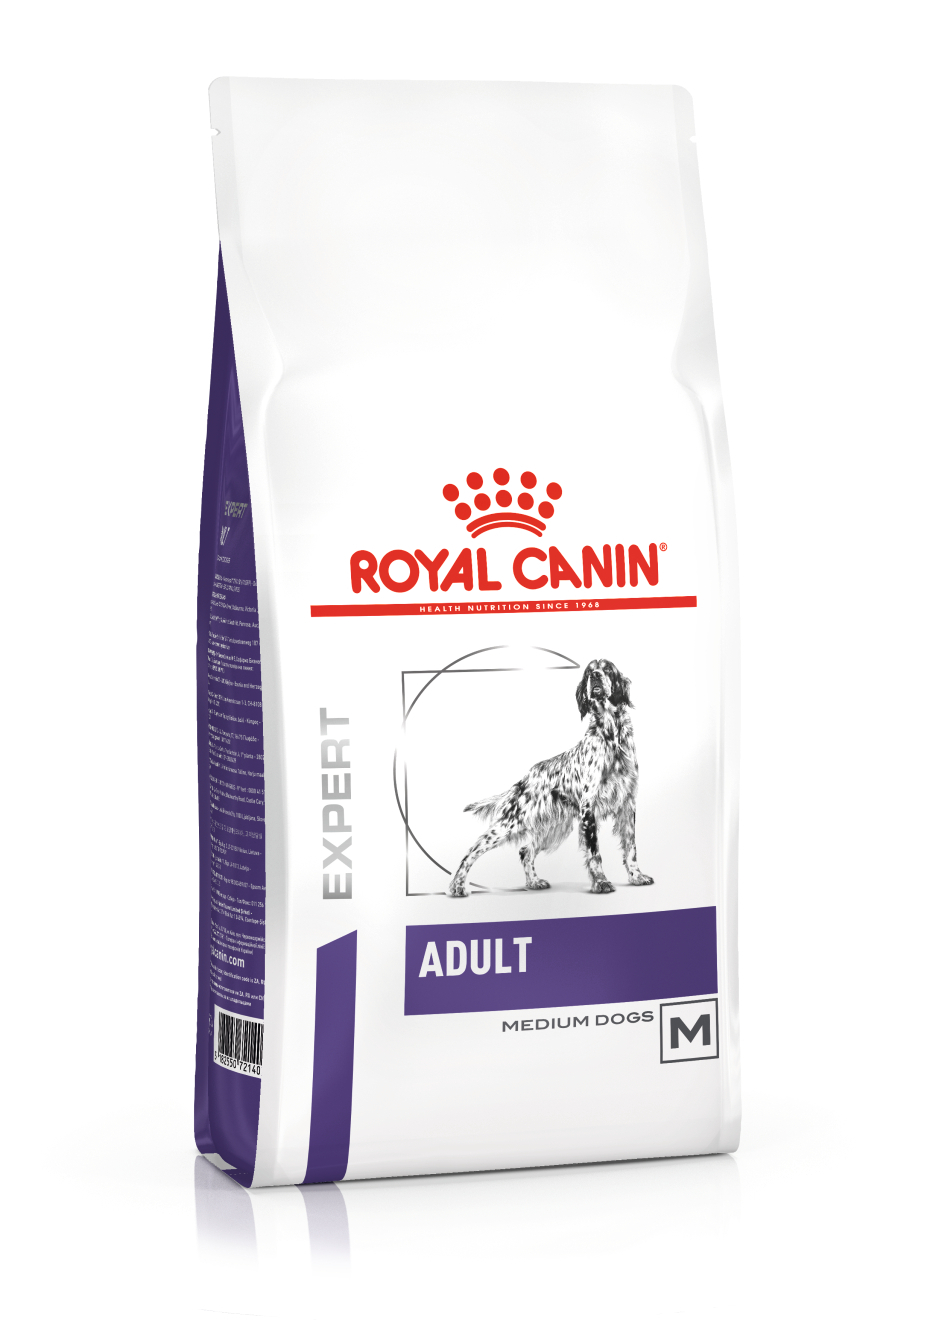 Royal Canin Veterinary Diet VCN Adult Medium für mittelgroße Hunde